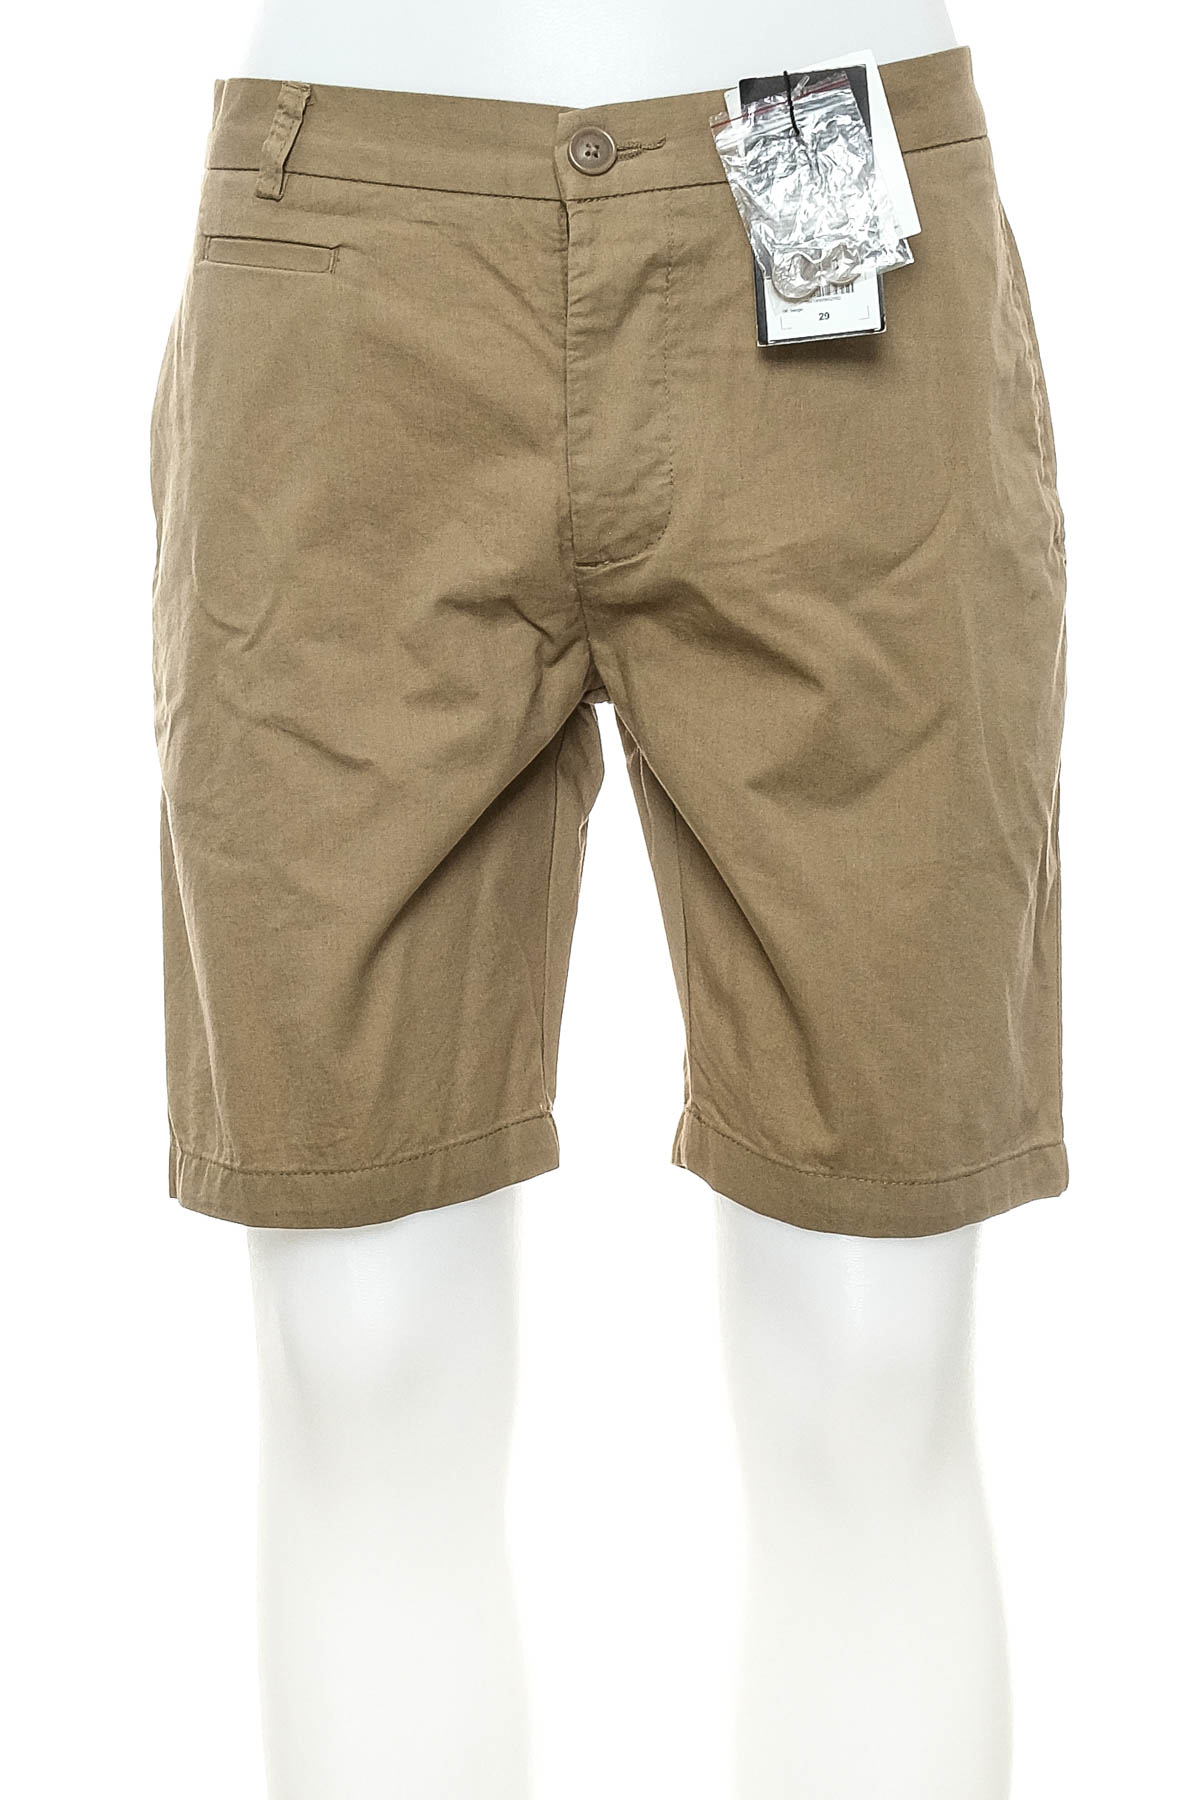 Men's shorts - BEN STONE - 0